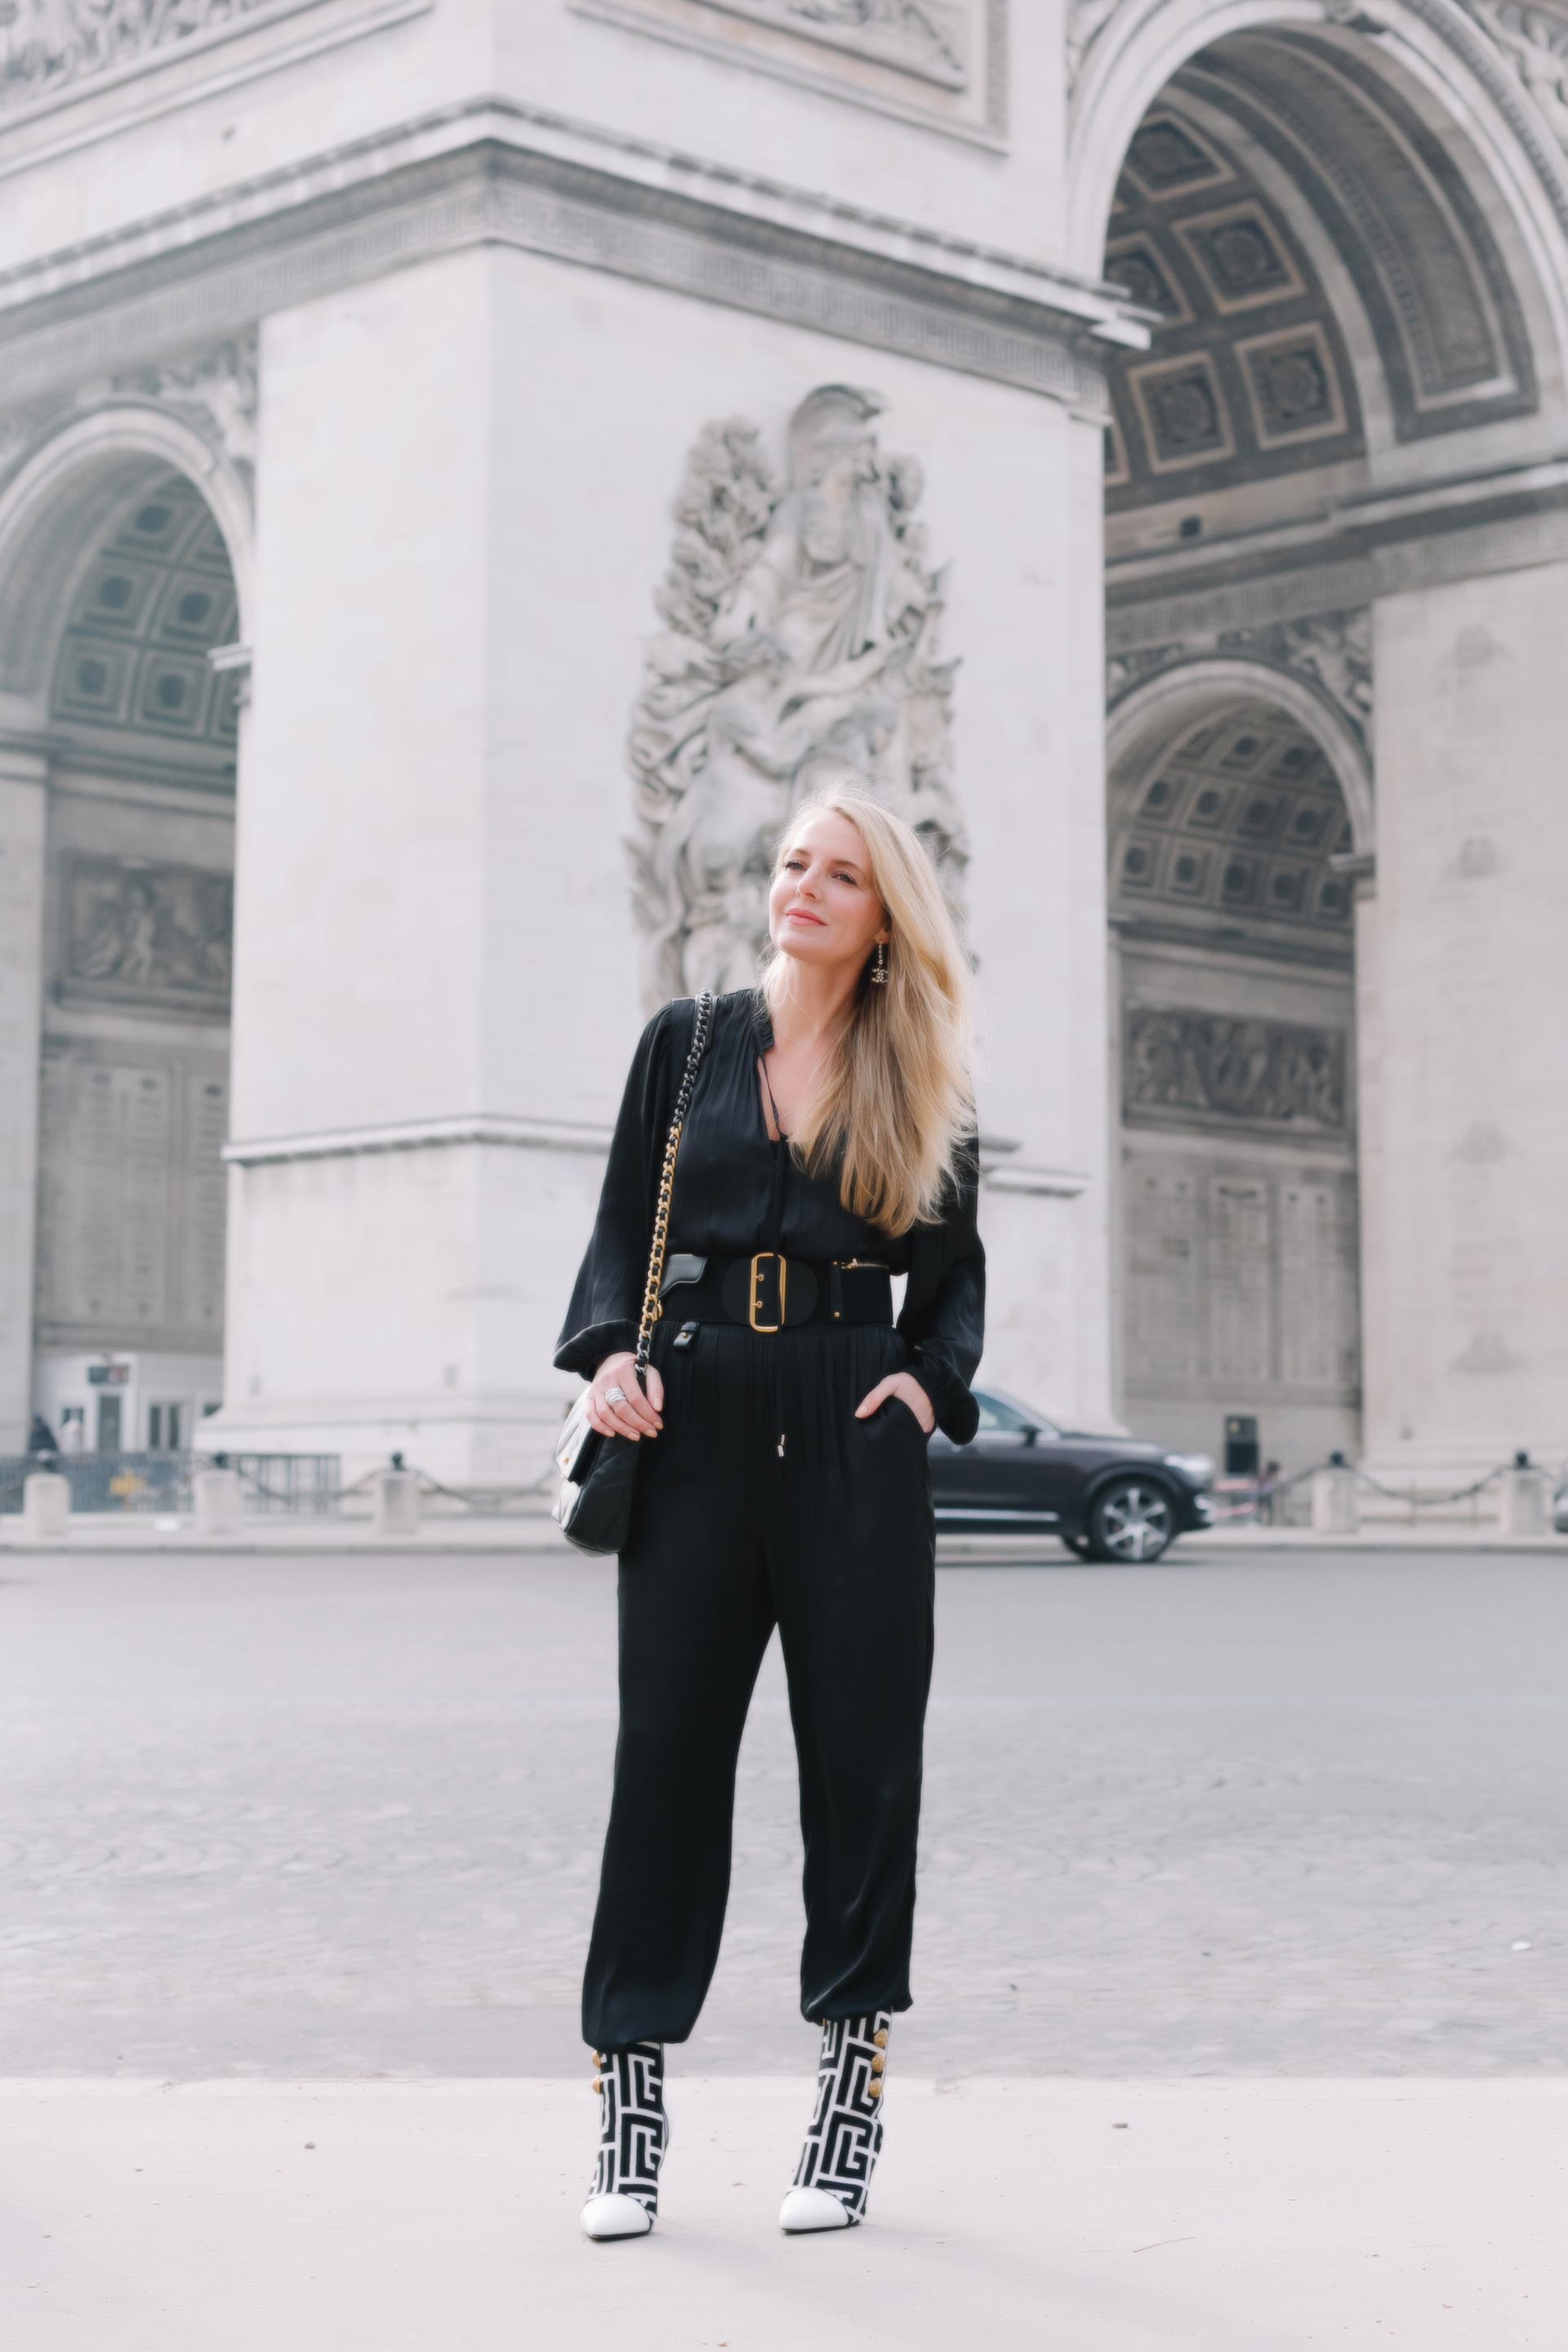 Erin Busbee at the arc de Triomphe in Paris photo by Rachel Calvo Portraits